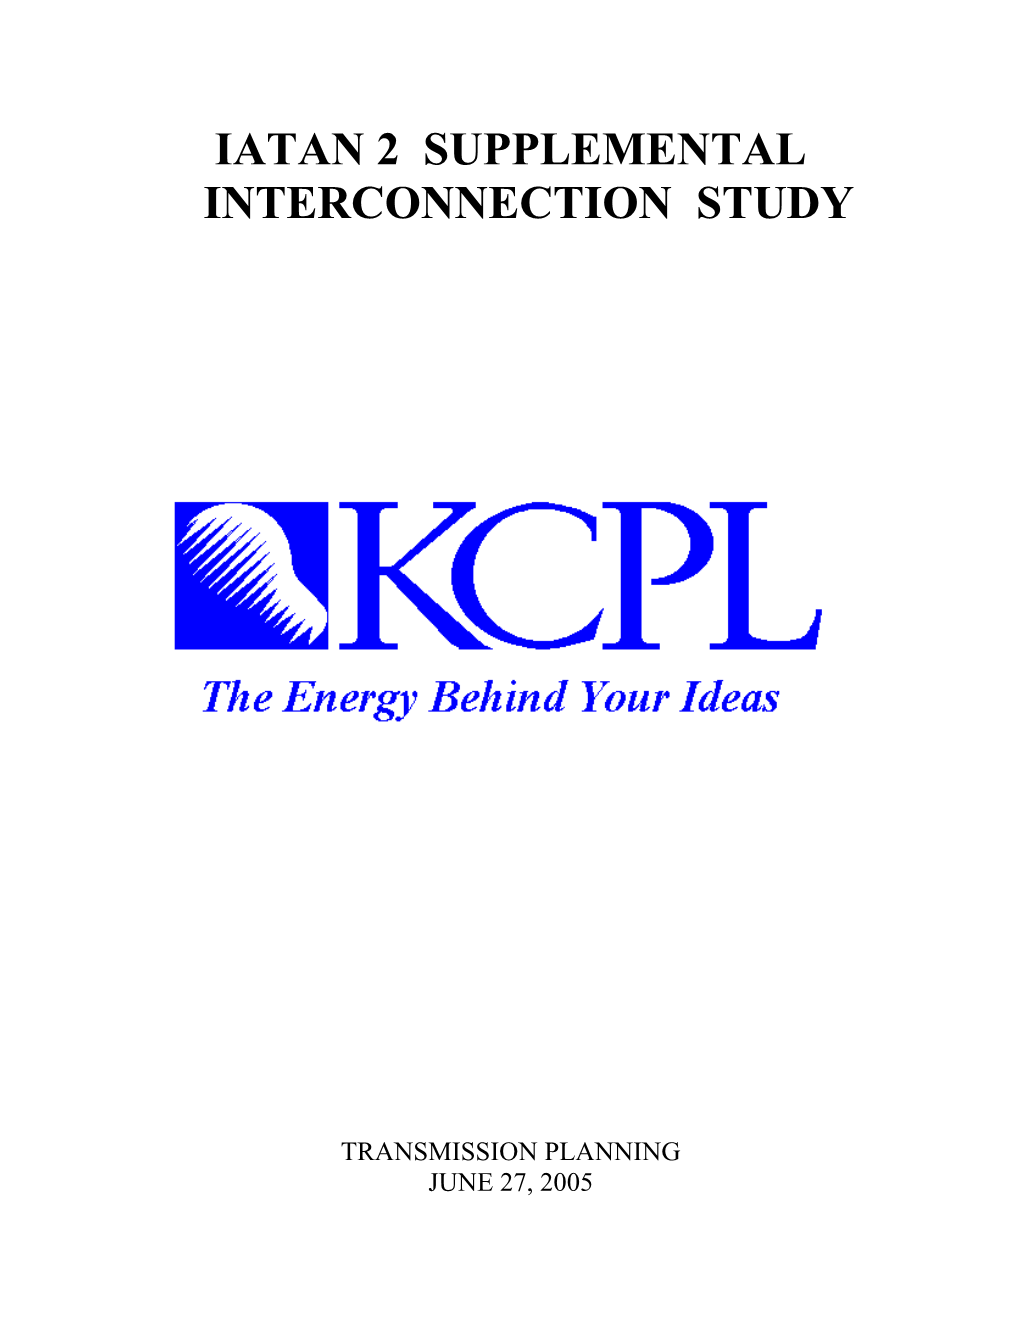 Kcpl Transmission Planning